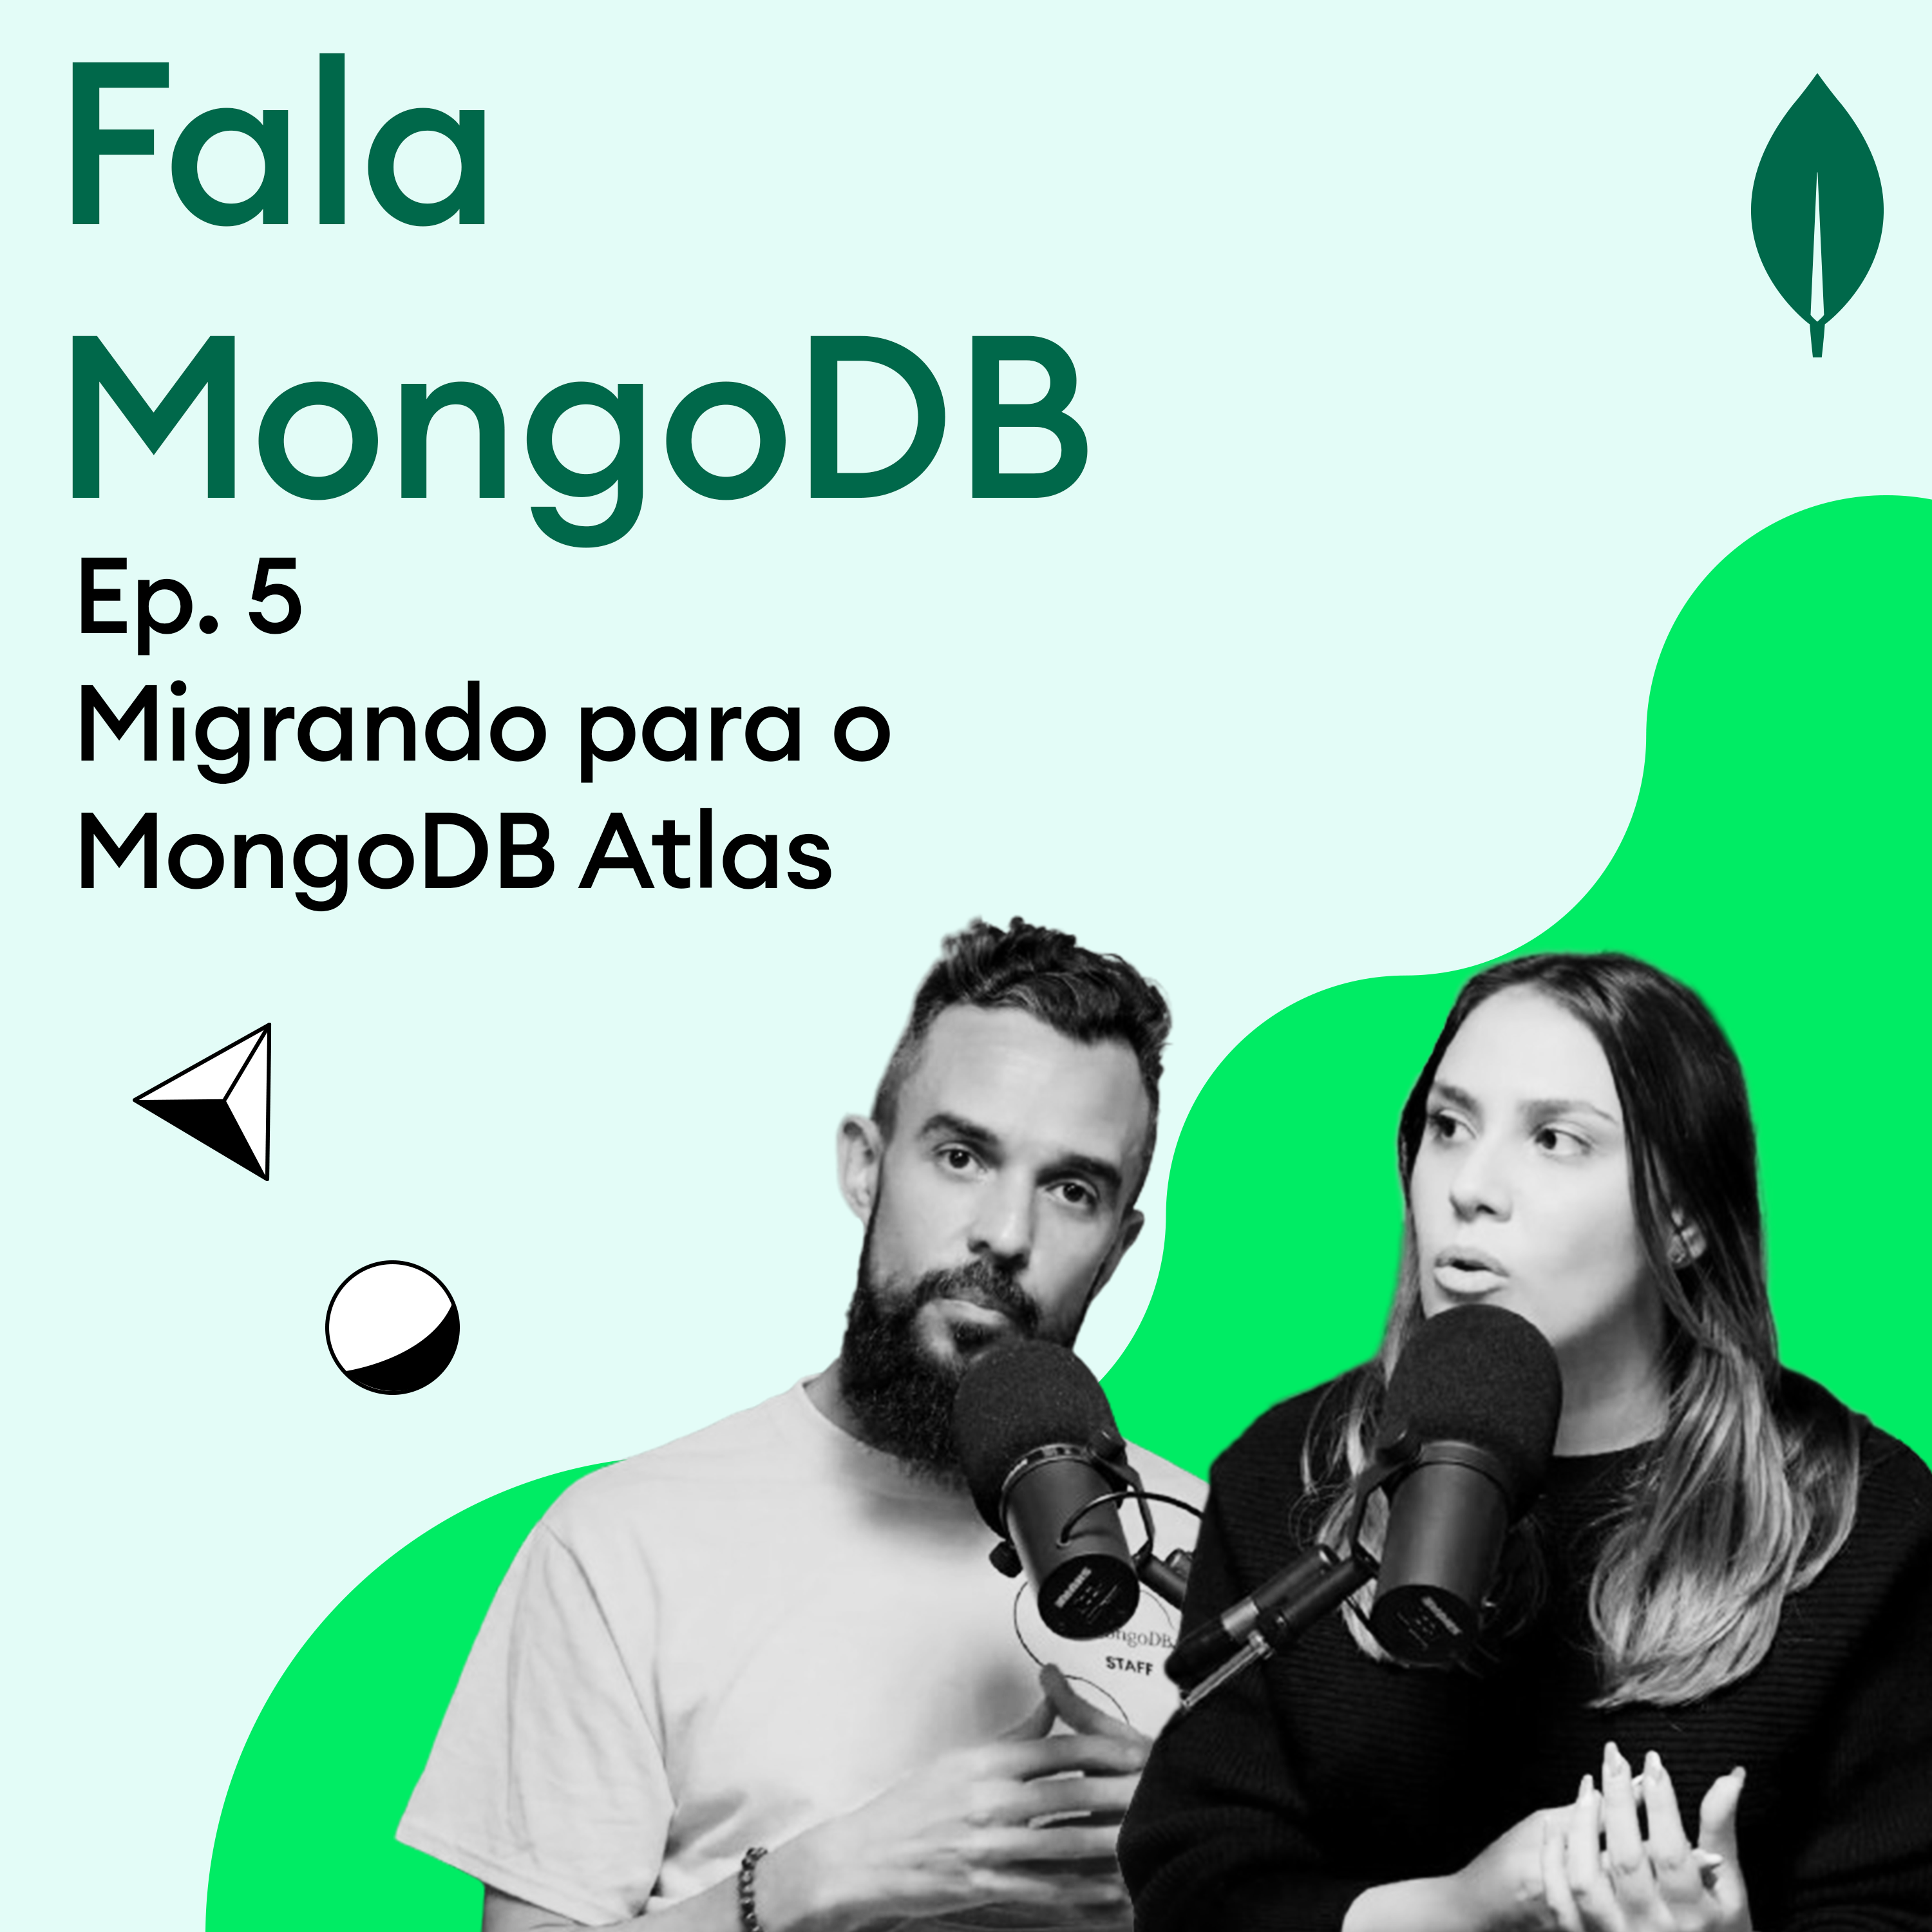 Fala MongoDB Ep.5 Migrando para MongoDB Atlas